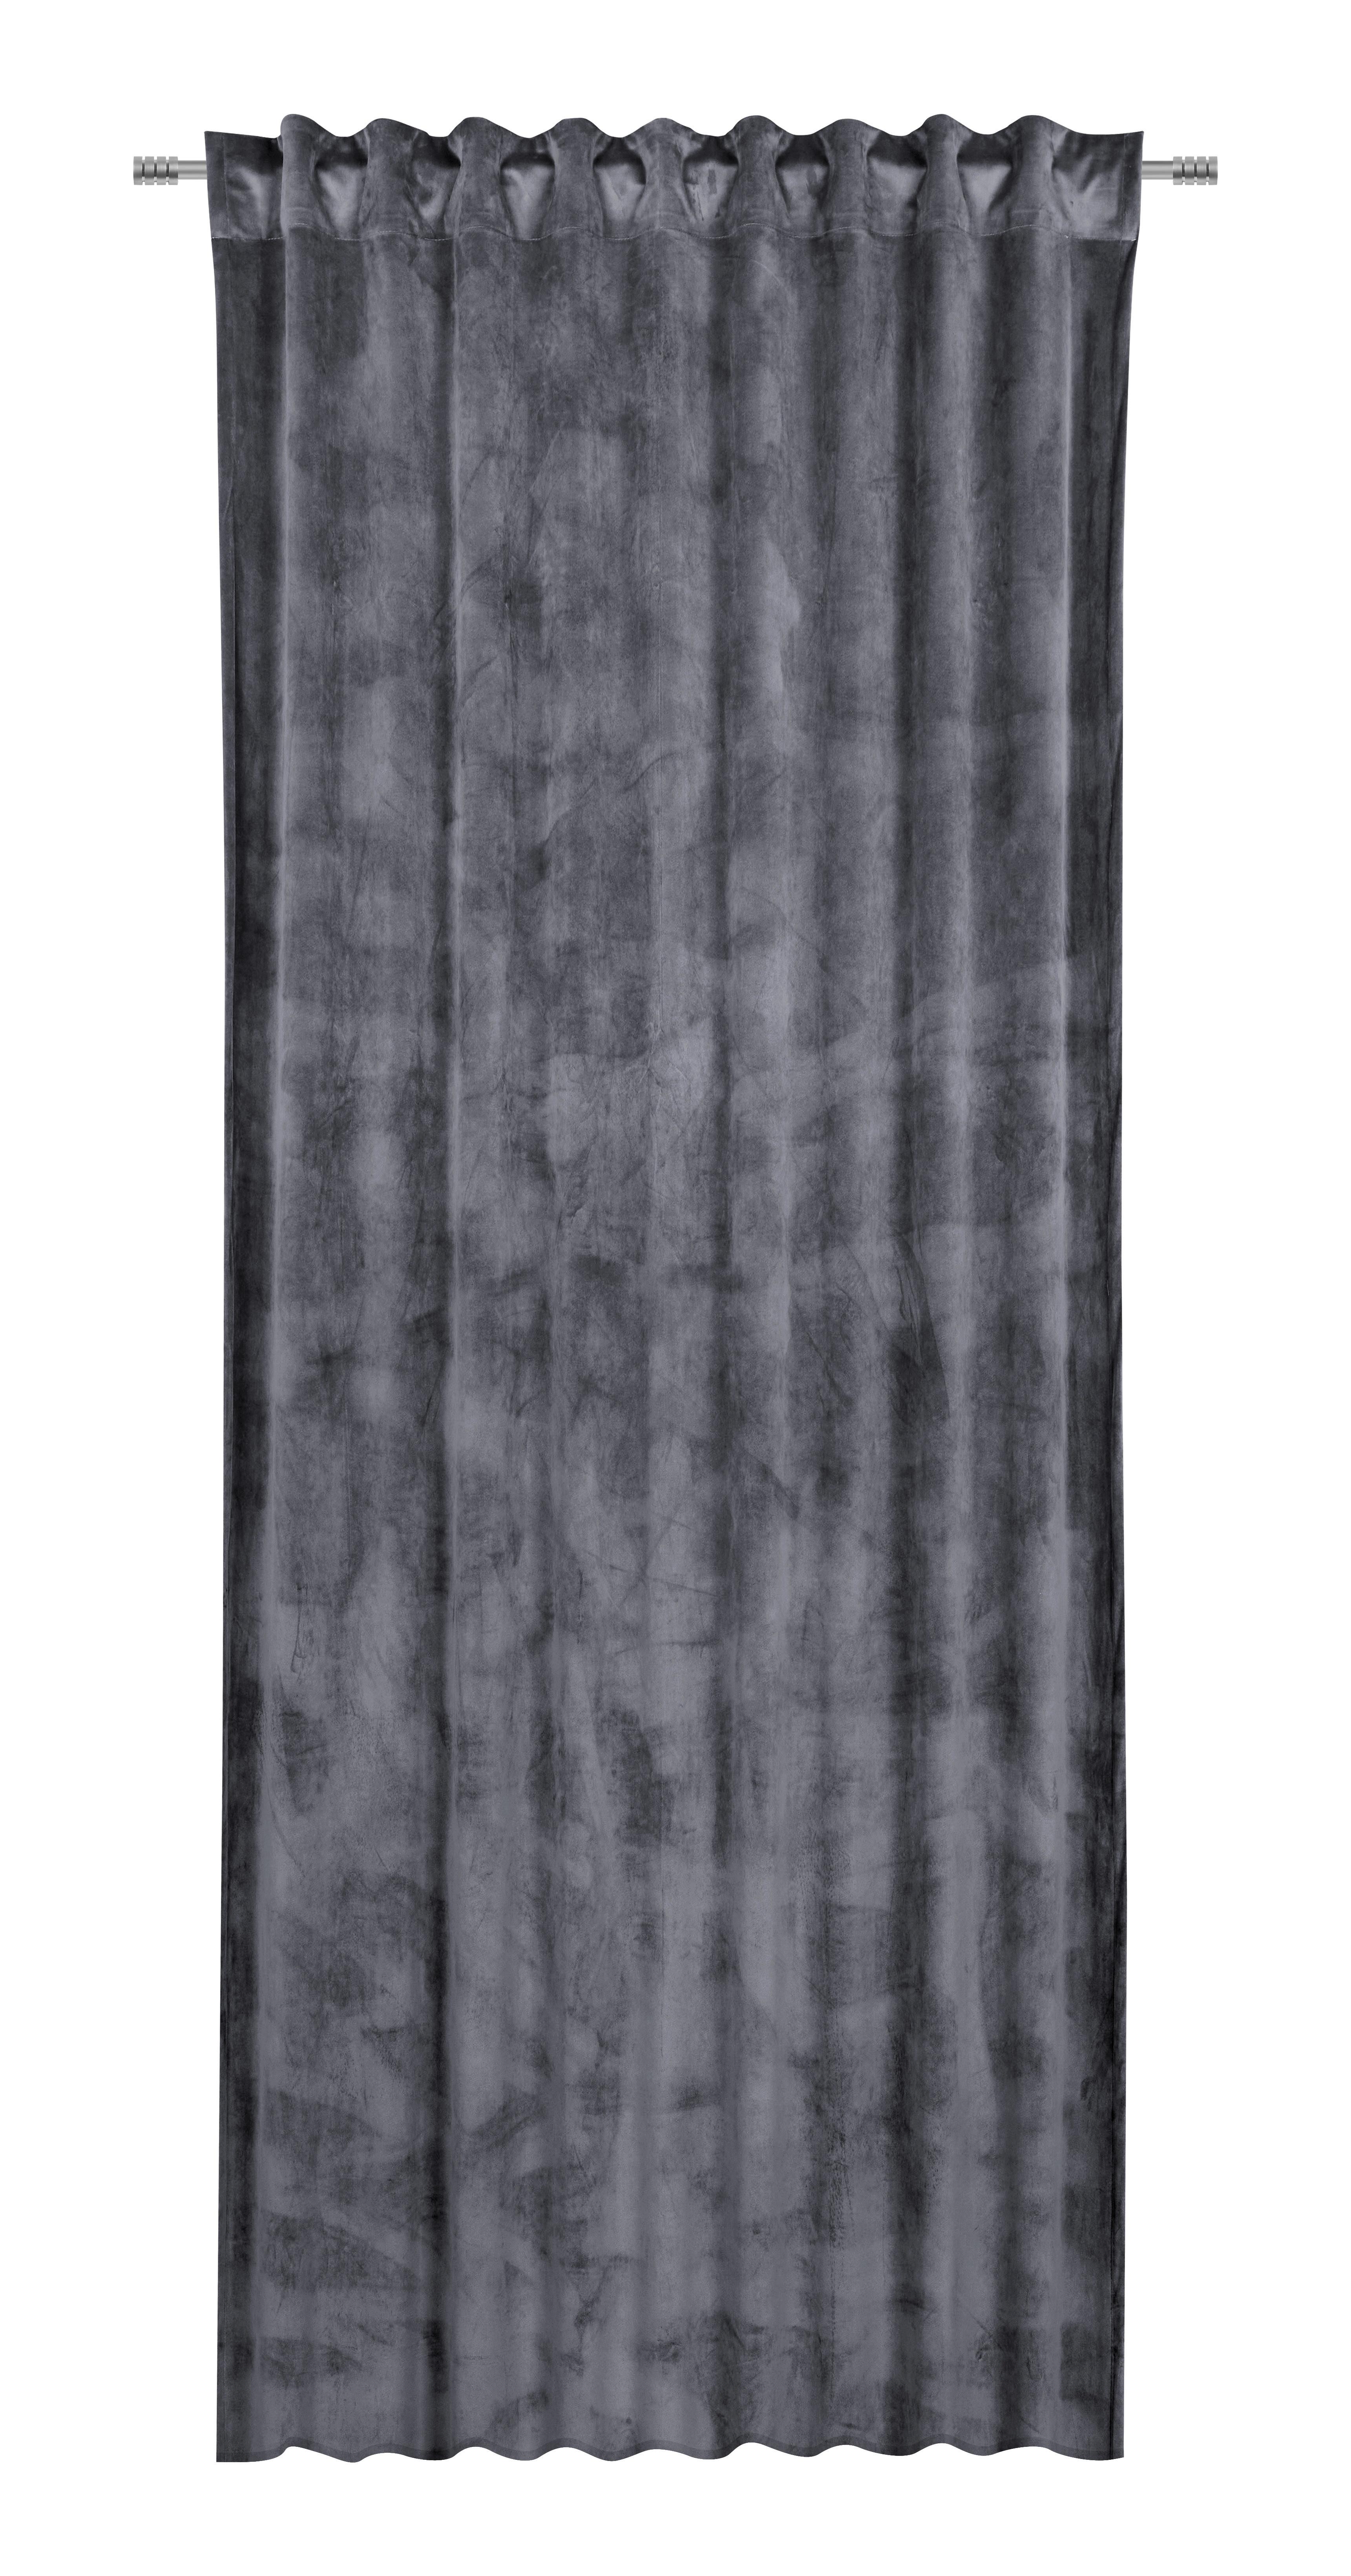 Fertigvorhang Viola in Anthrazit ca. 140x245cm - Anthrazit, KONVENTIONELL, Textil (140/245cm) - Premium Living